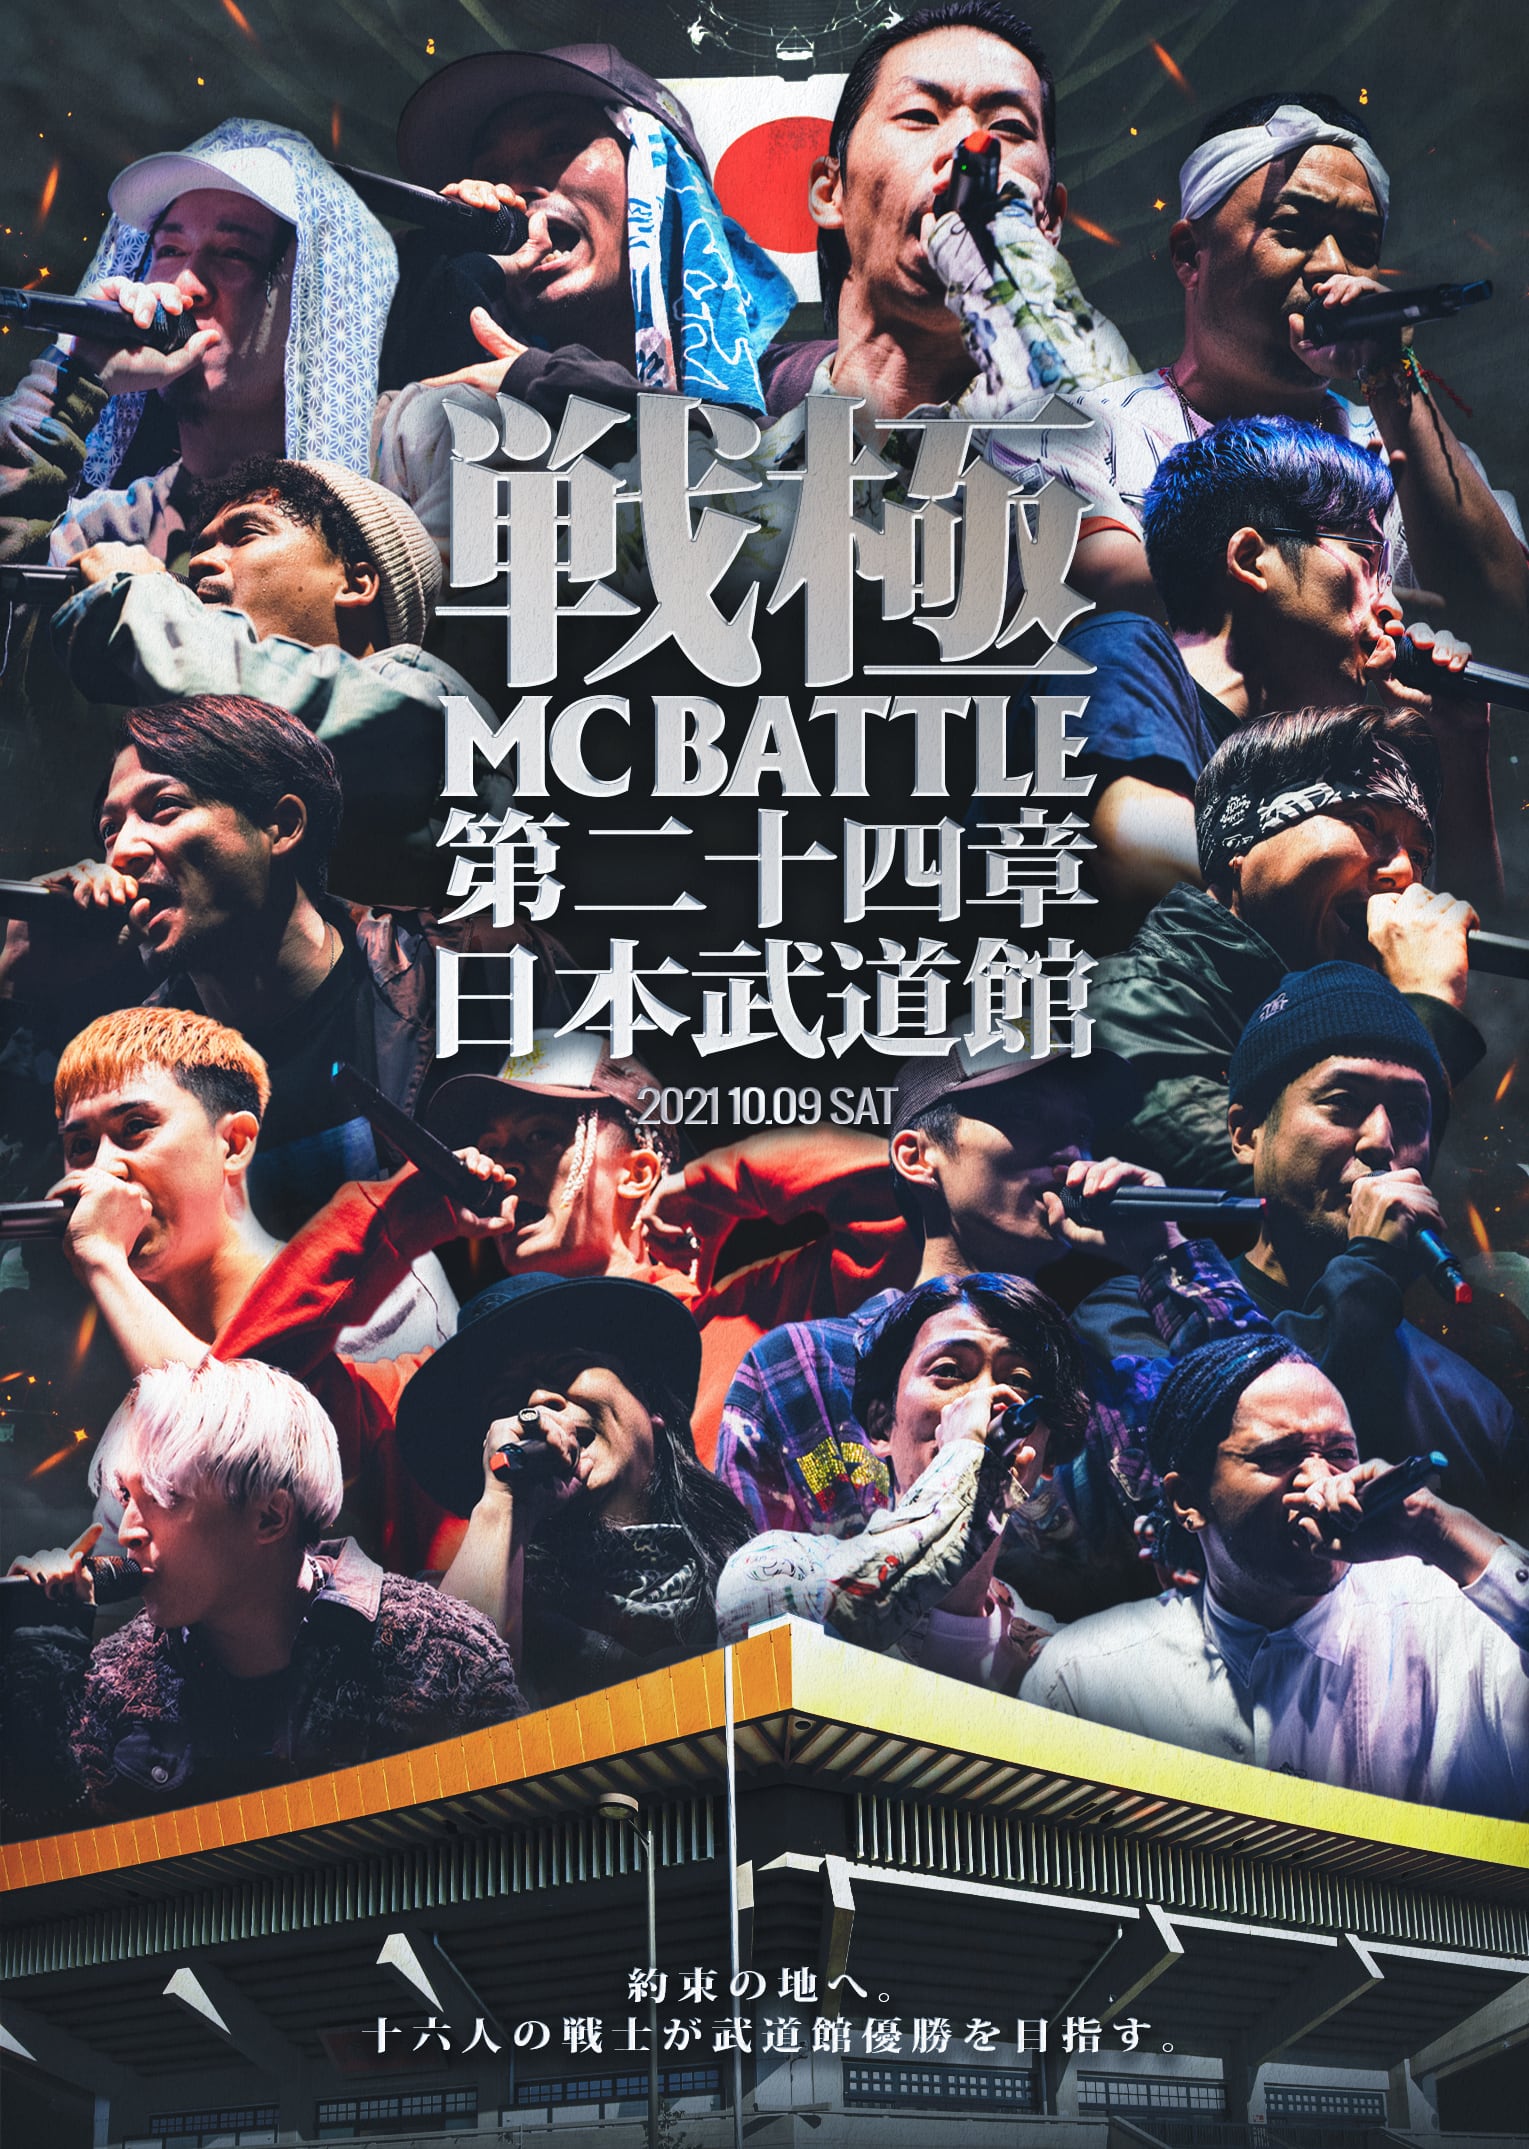 戦極DVD | 戦極MCBATTLE On Line Shop